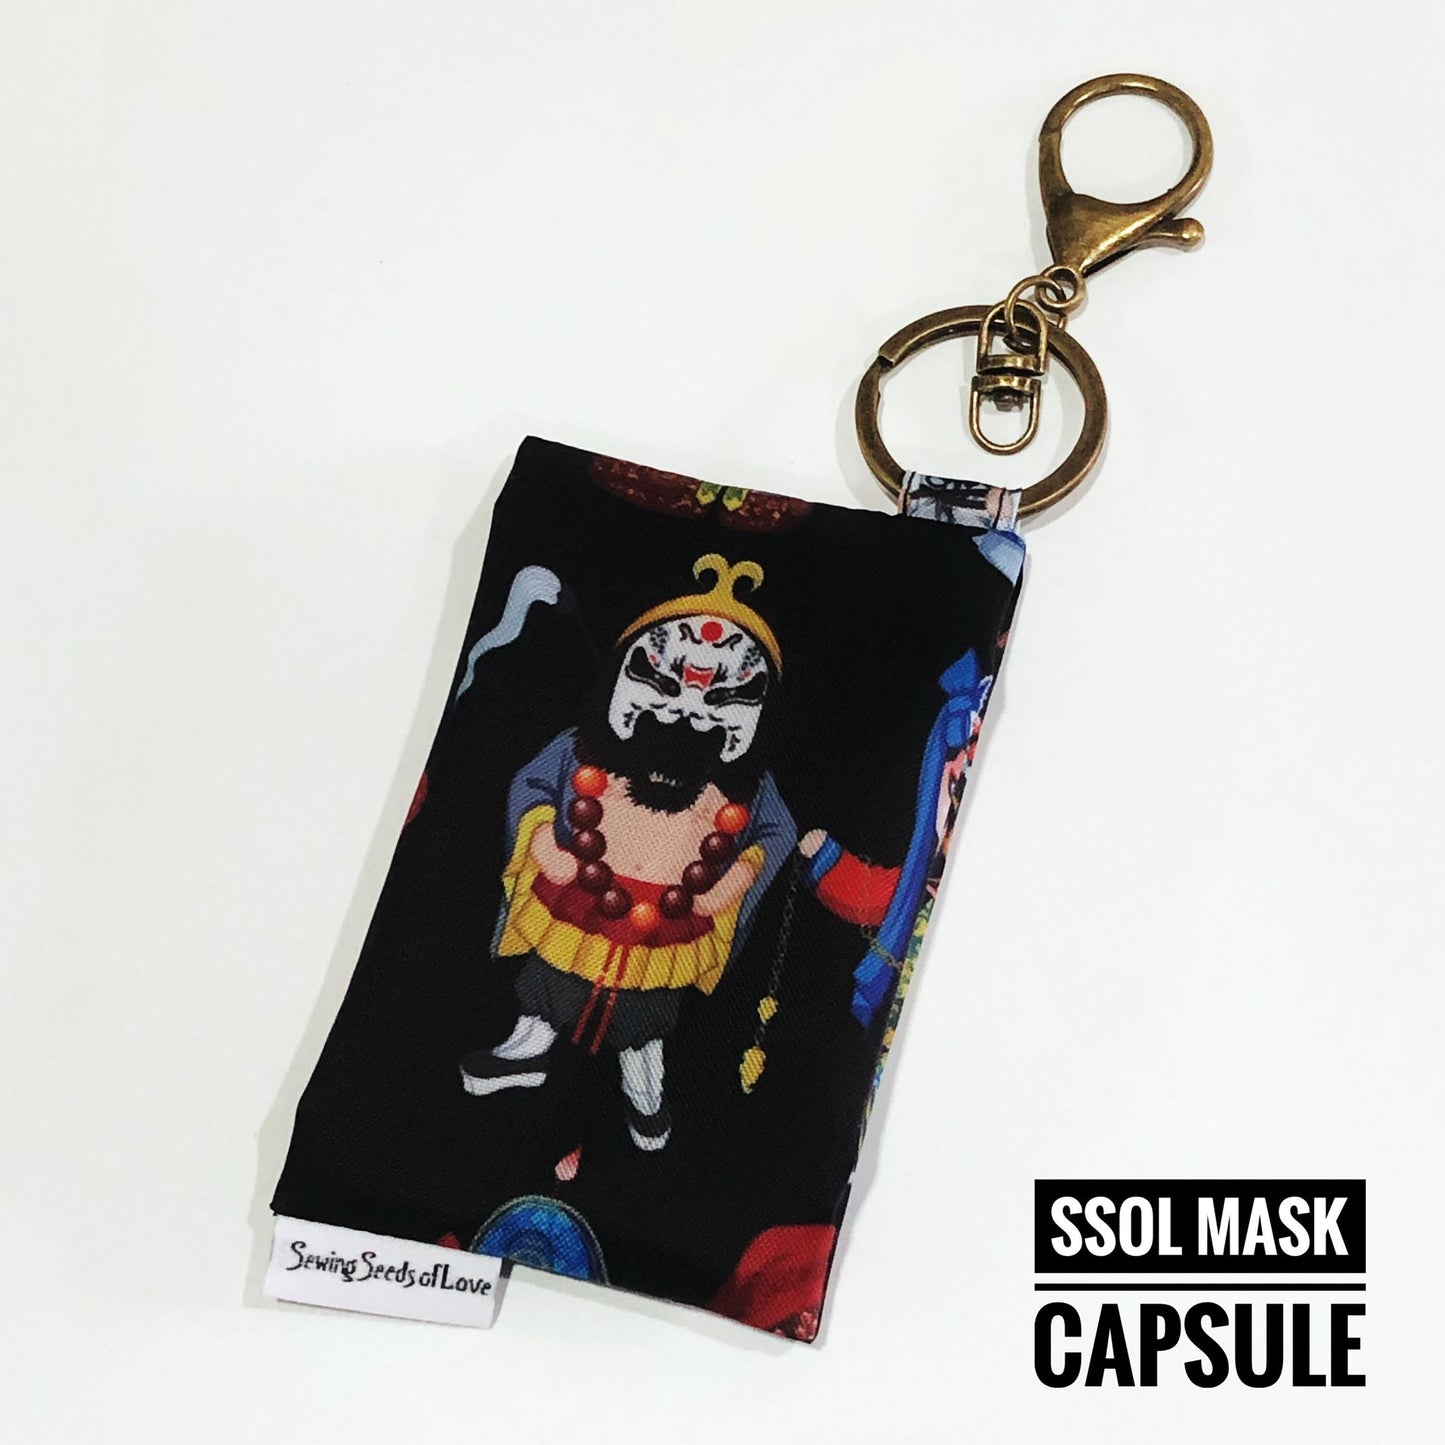 Mask Capsule - Chinese Opera Characters